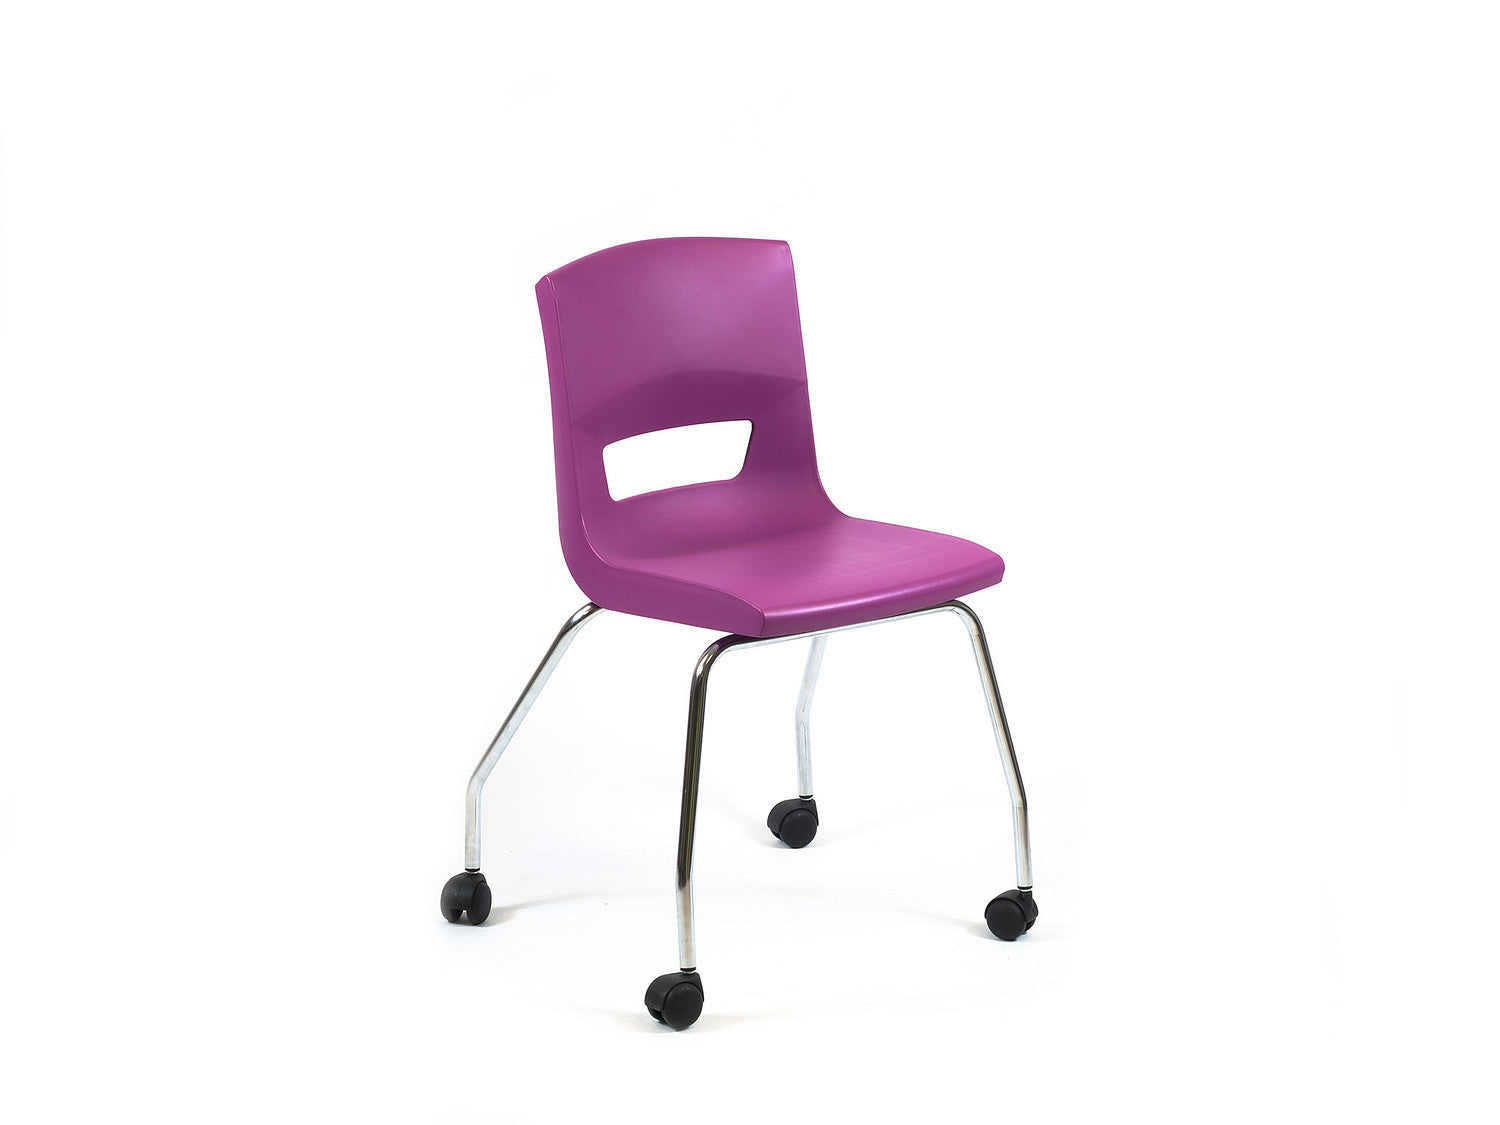 Postura 4 legs on castor unique stlye classroom chair purple